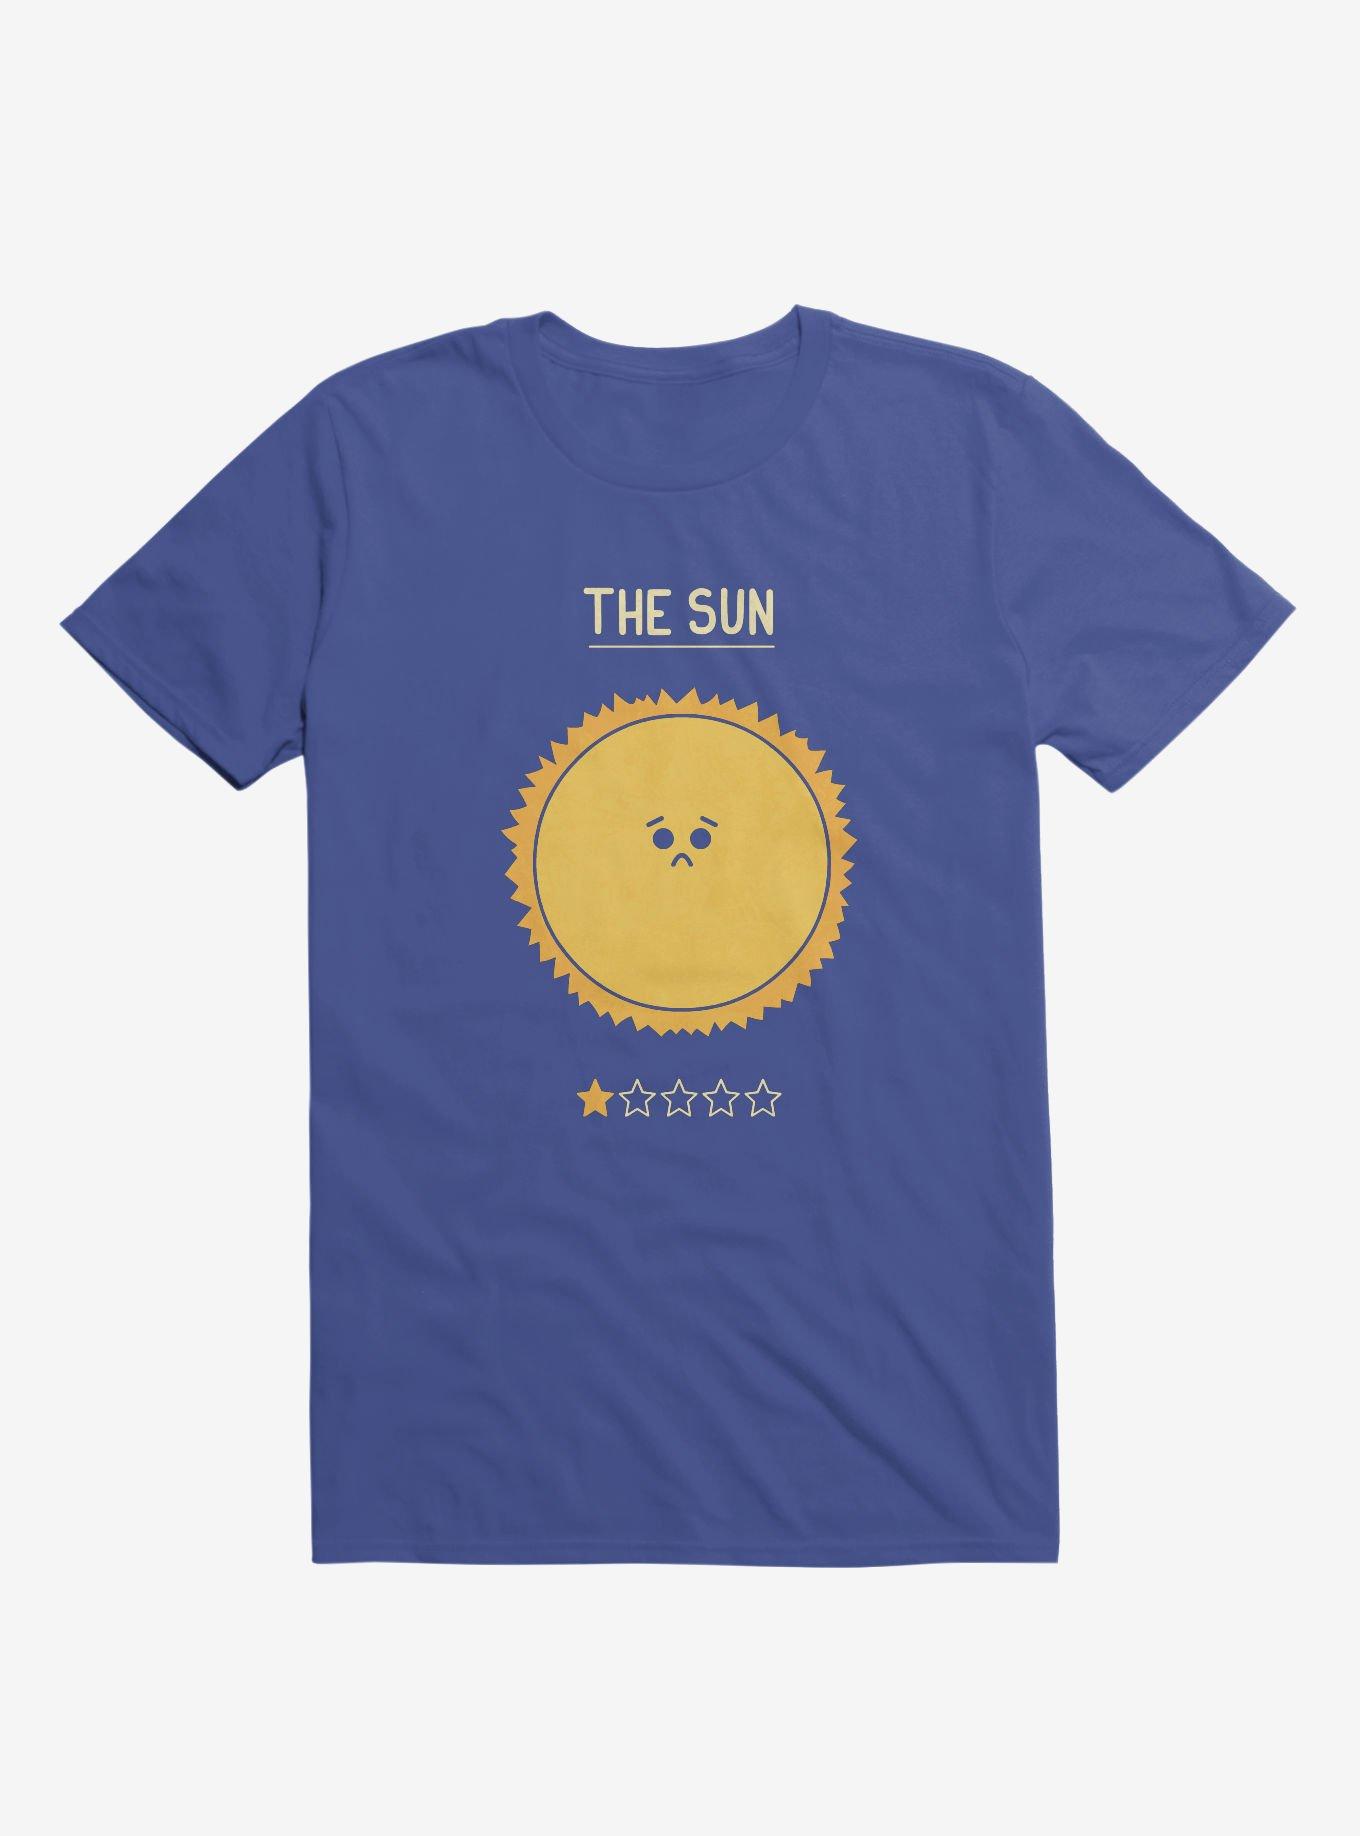 The Sun One Star Rating Royal Blue T-Shirt